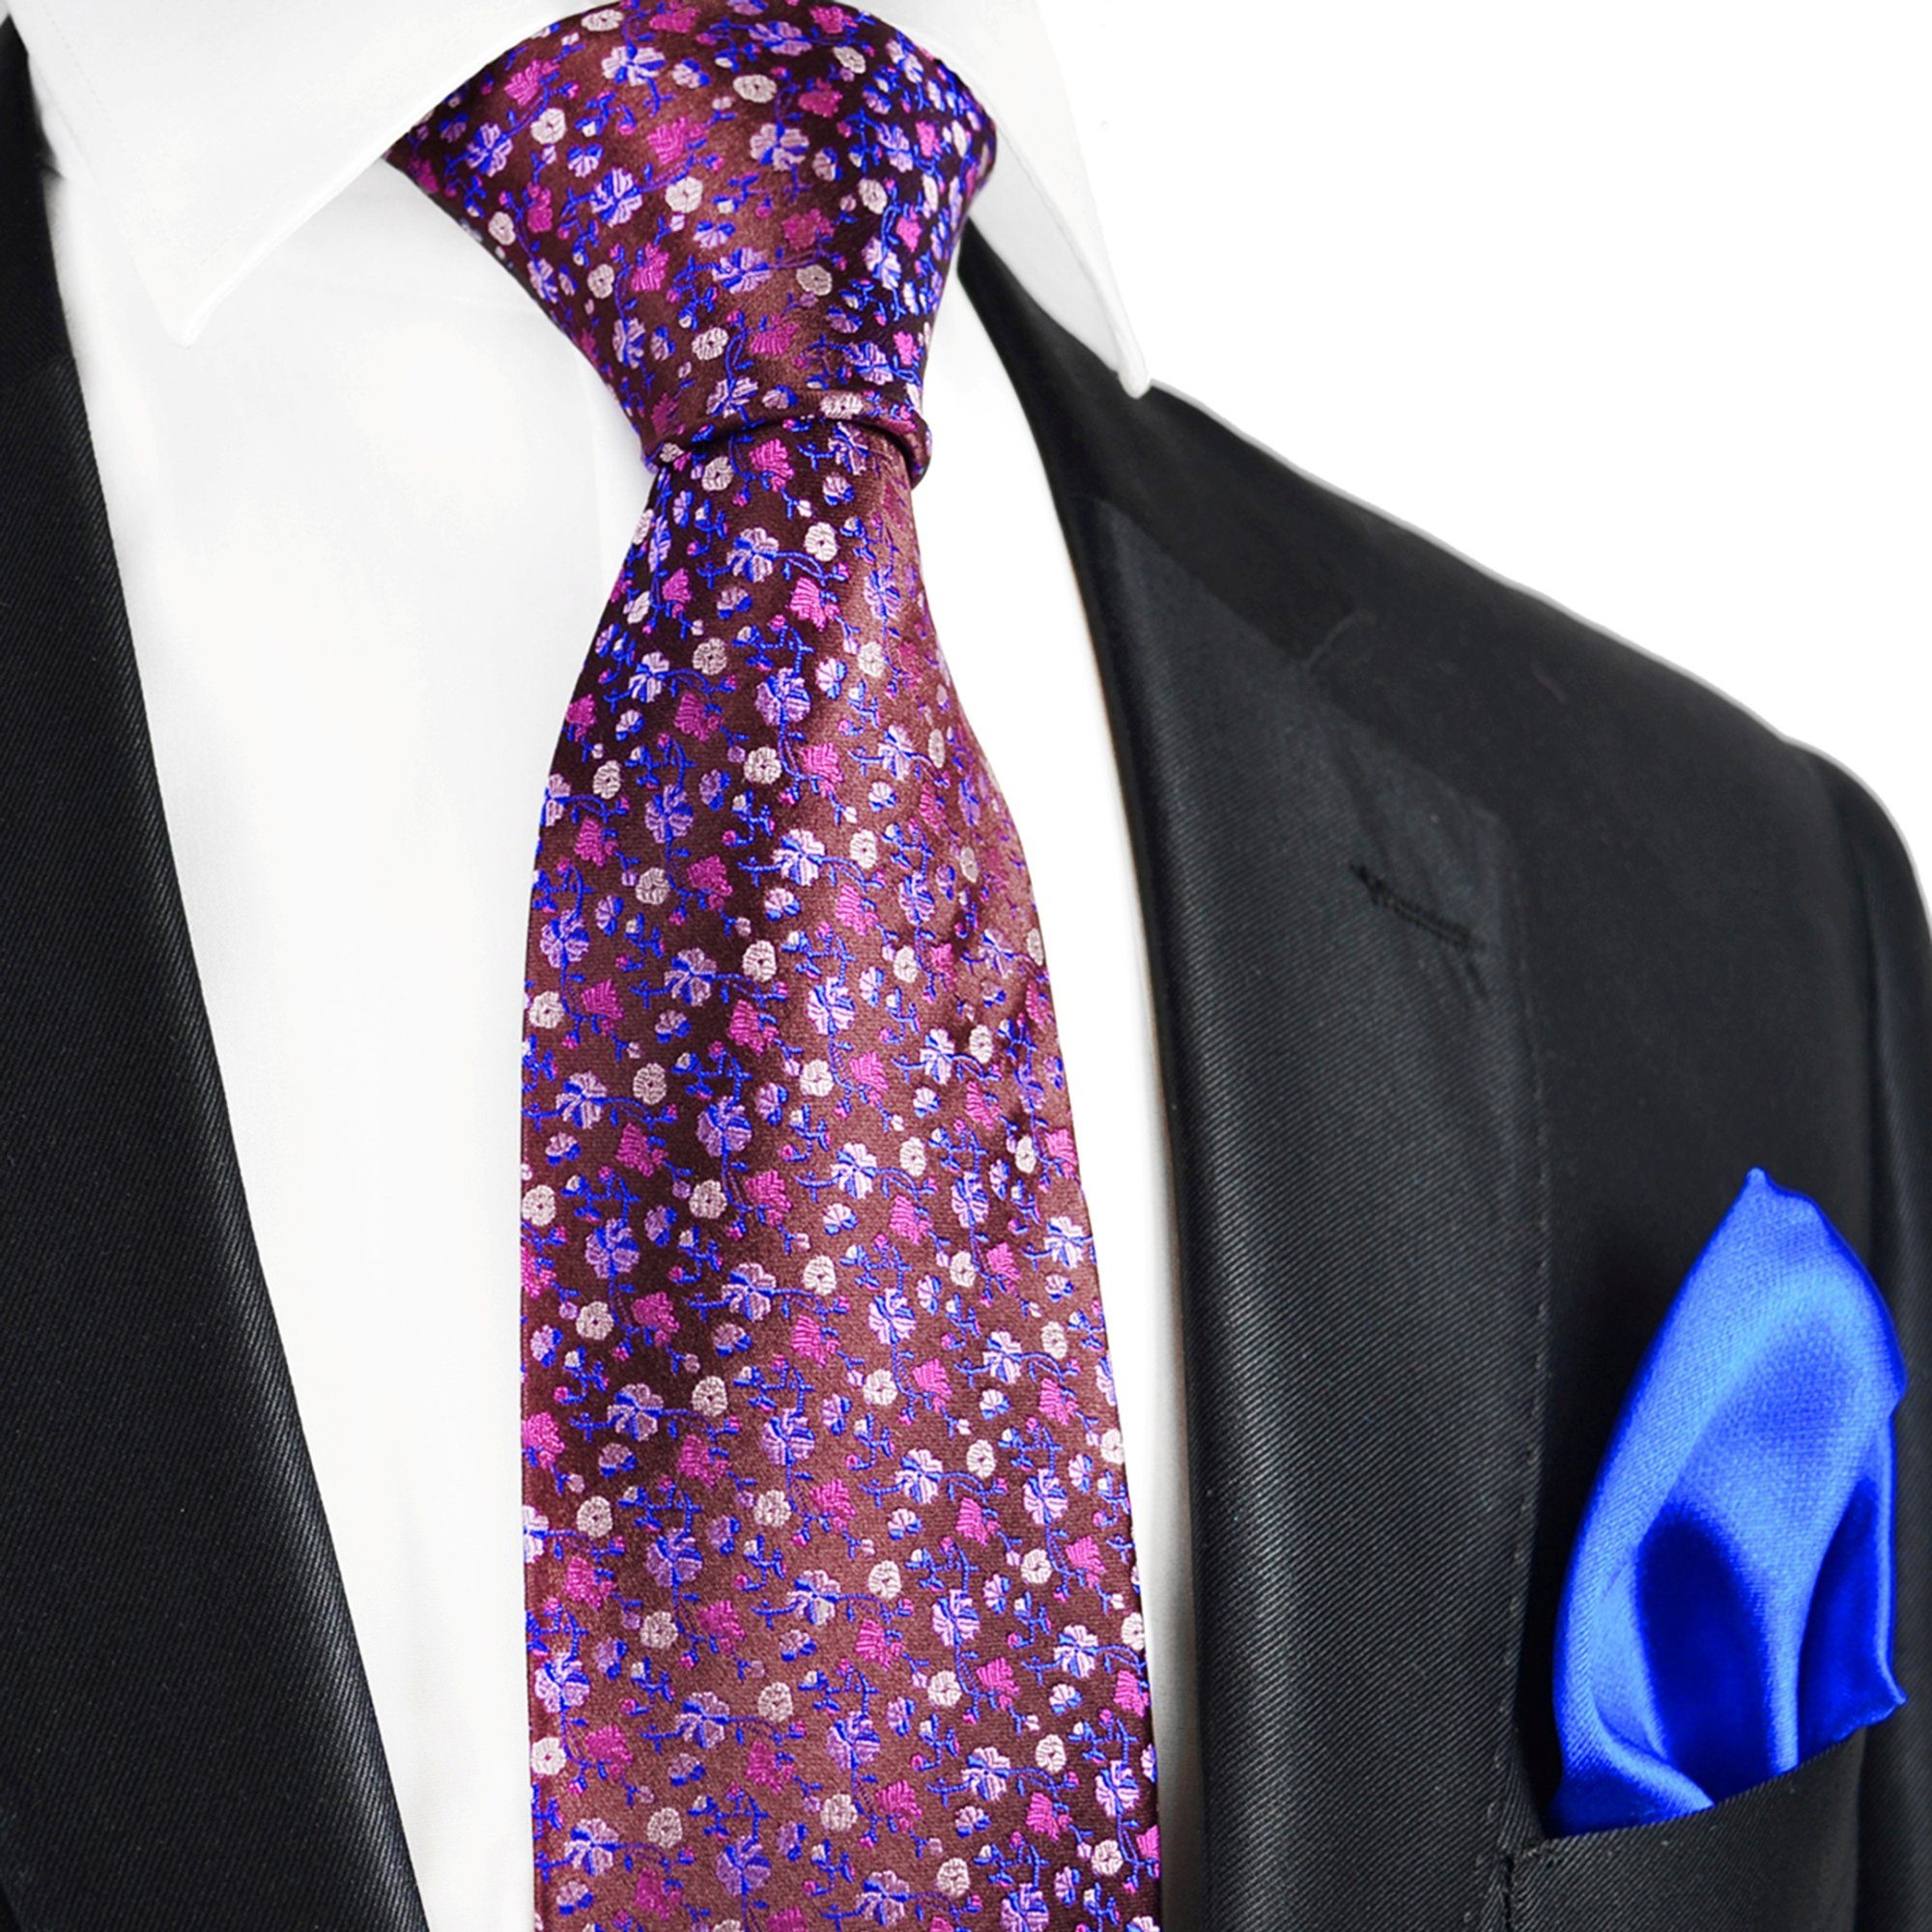 Paul Malone Krawatte 7-Fold mit S14788-24 Schlips 2-St., Seidenkrawatte (Set, elegant geblümt mauve modern pink Seide 100% Einstecktuch)